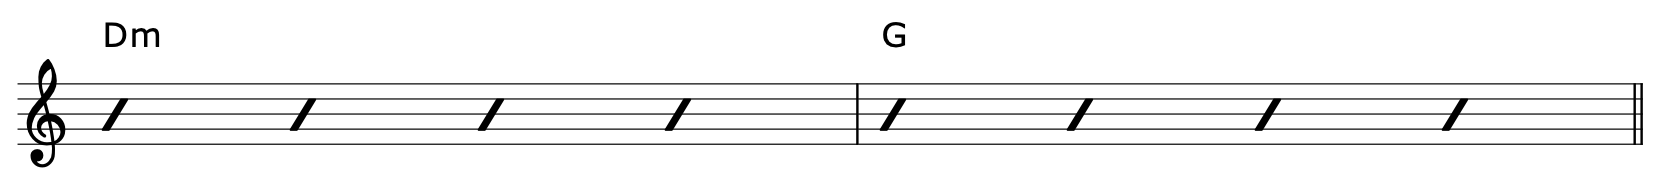 Modal Chord Progression D Dorian